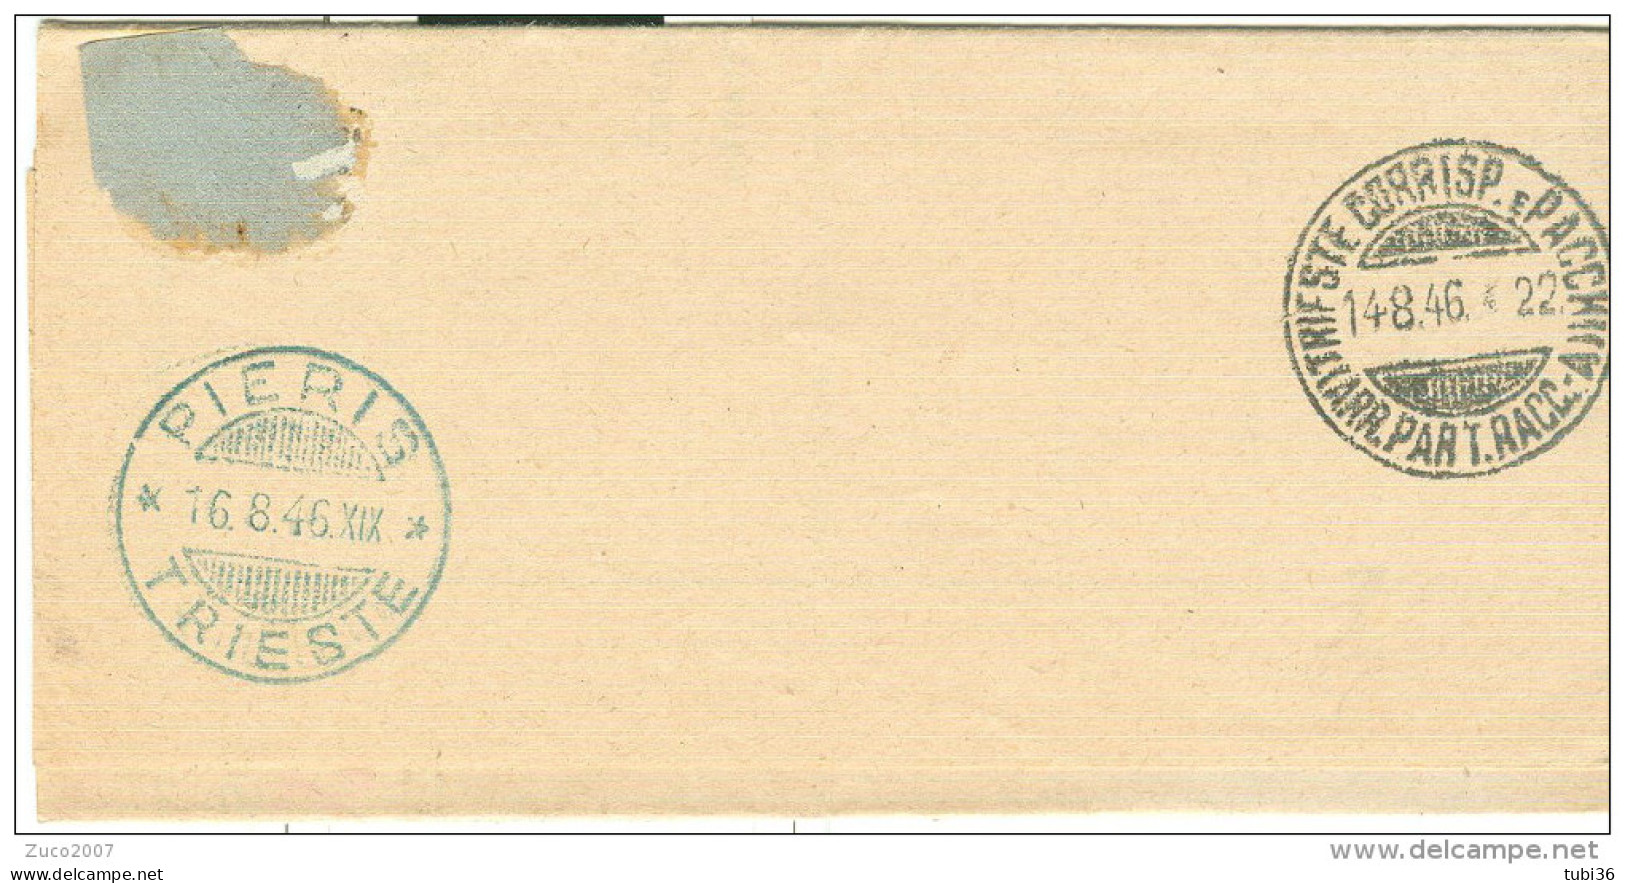 AMG-VG, IMP. £.10,VARIETA SOPRASTAMPA SPOSTATA ISOLATO IN TARIFFA MANO. RACC., 1946, POSTE MONFALCONE -PIERIS, TRIESTE - Marcofilie